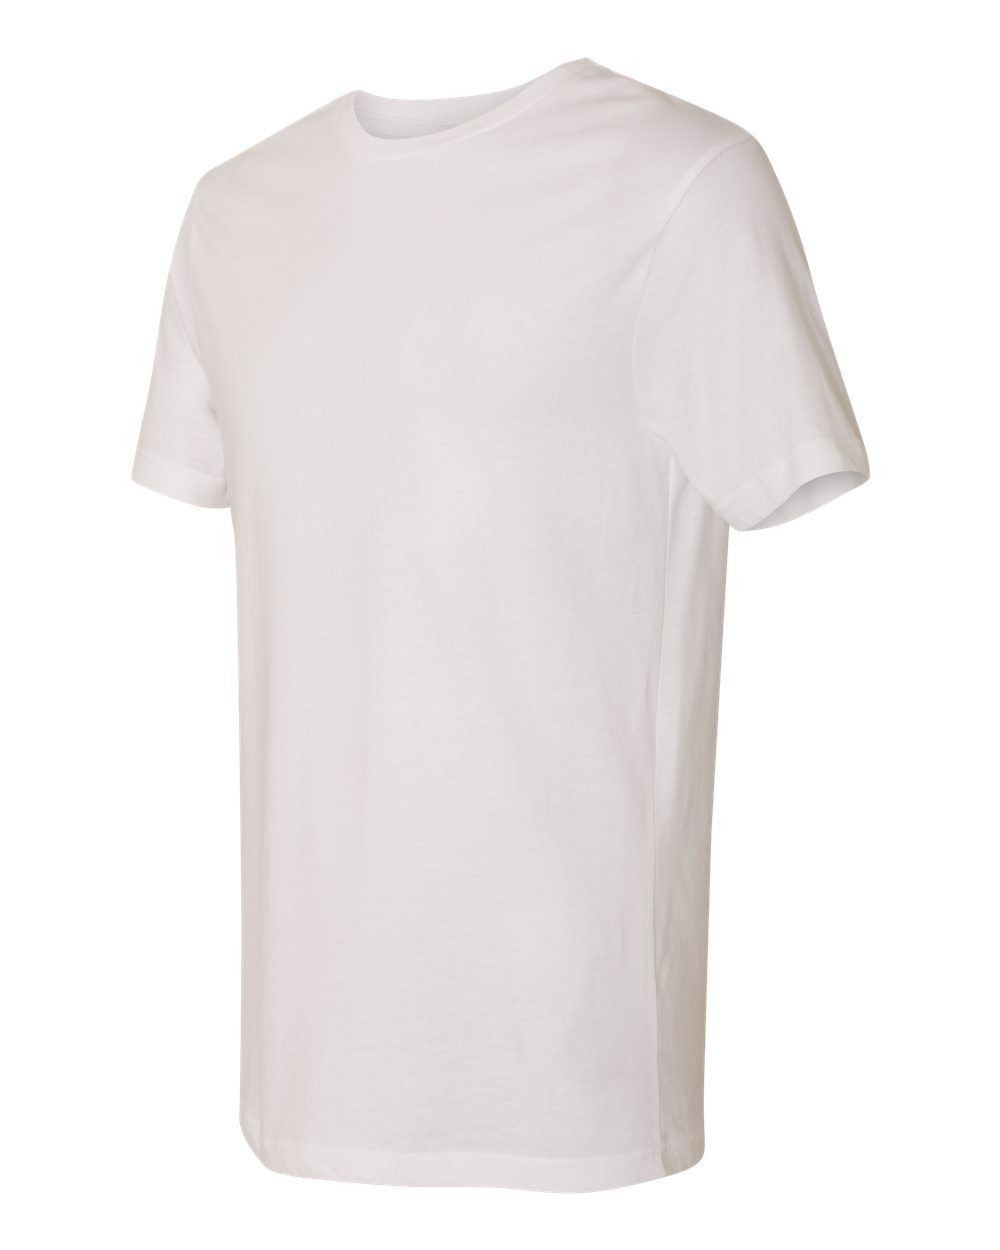 LAT 6980 - Heavyweight Combed Ringspun Cotton T-Shirt